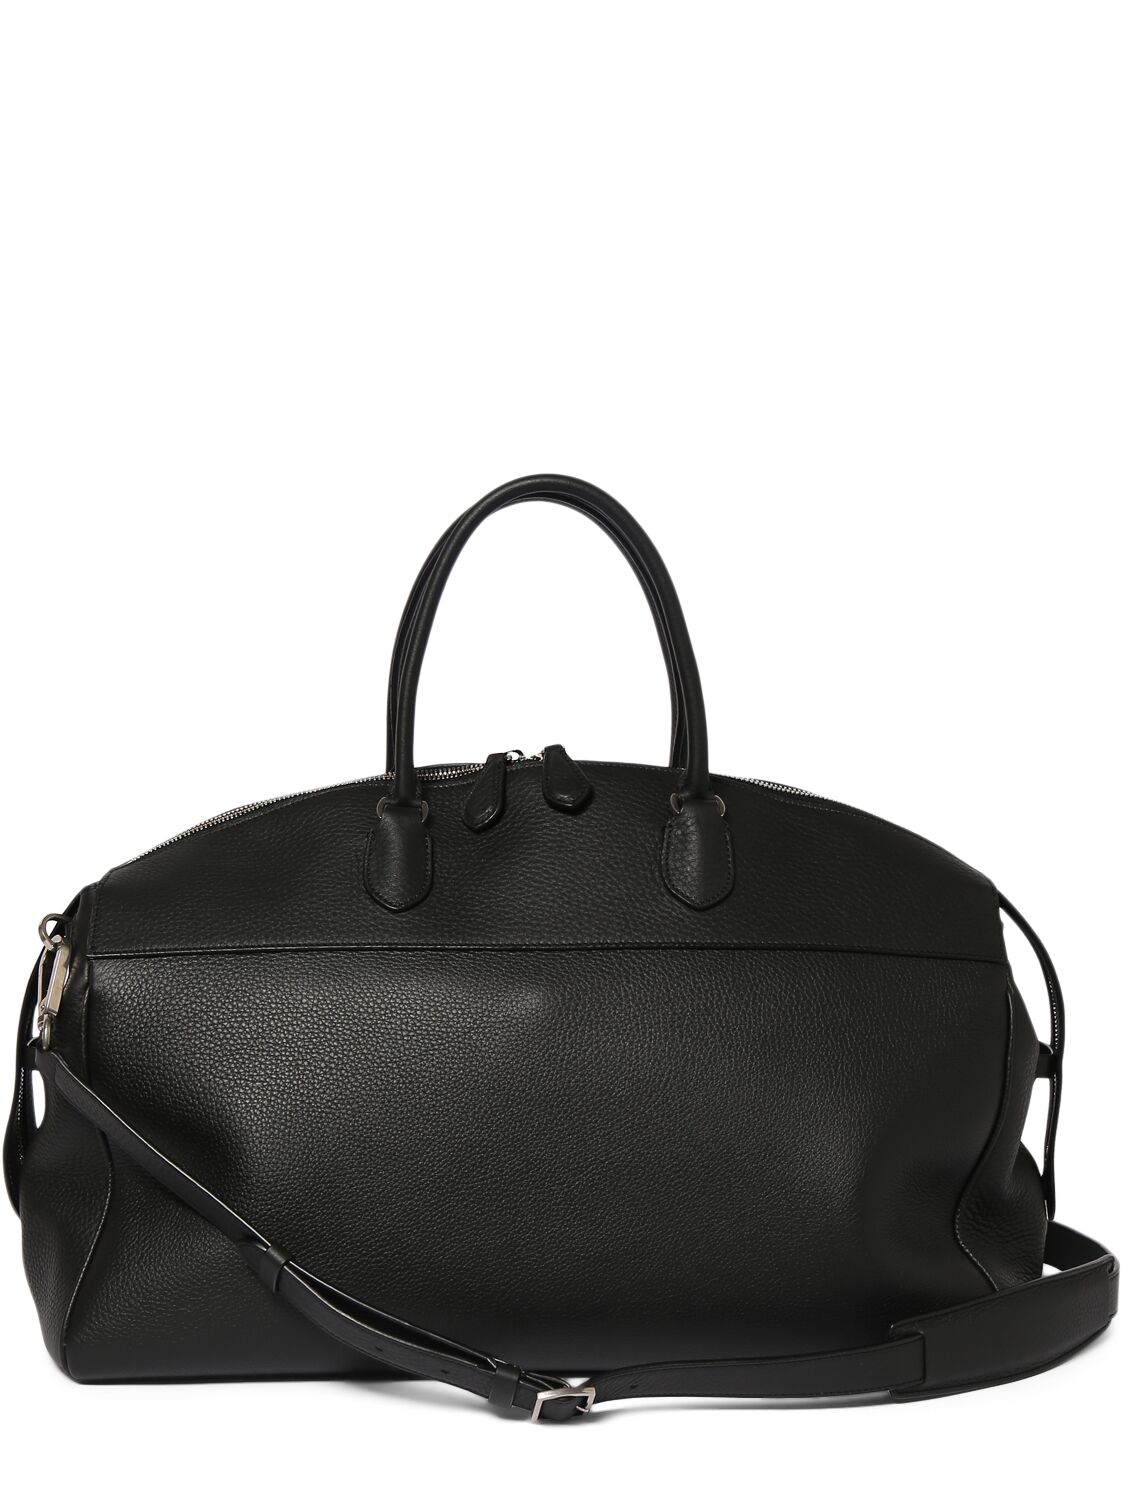 George Leather Duffle Bag